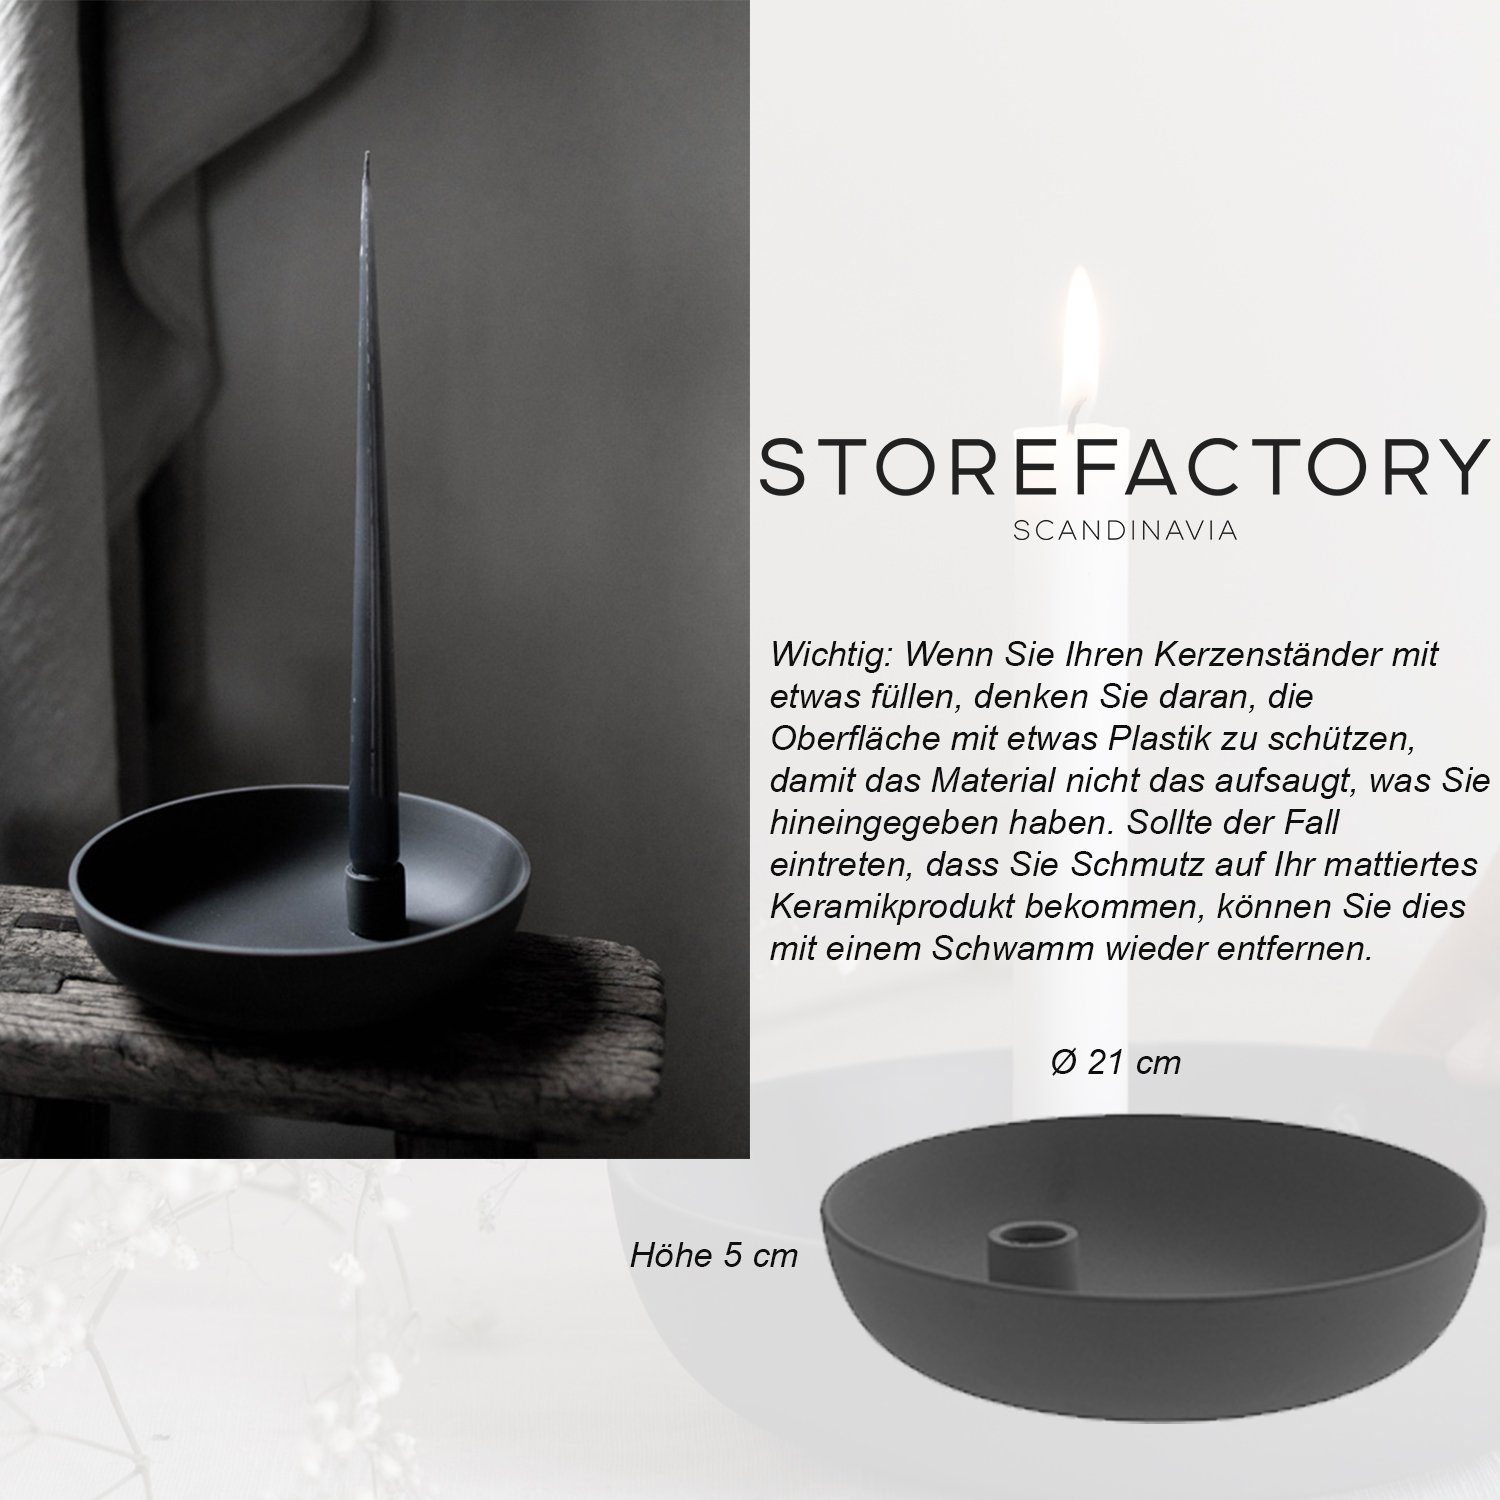 21 BxH Storefactory (1 Unikat Handgefertigt, St), cm daher L Kerzenhalter 5 x Lidatorp dunkelgrau, Kerzenhalter, Keramik, ein Scandinavia